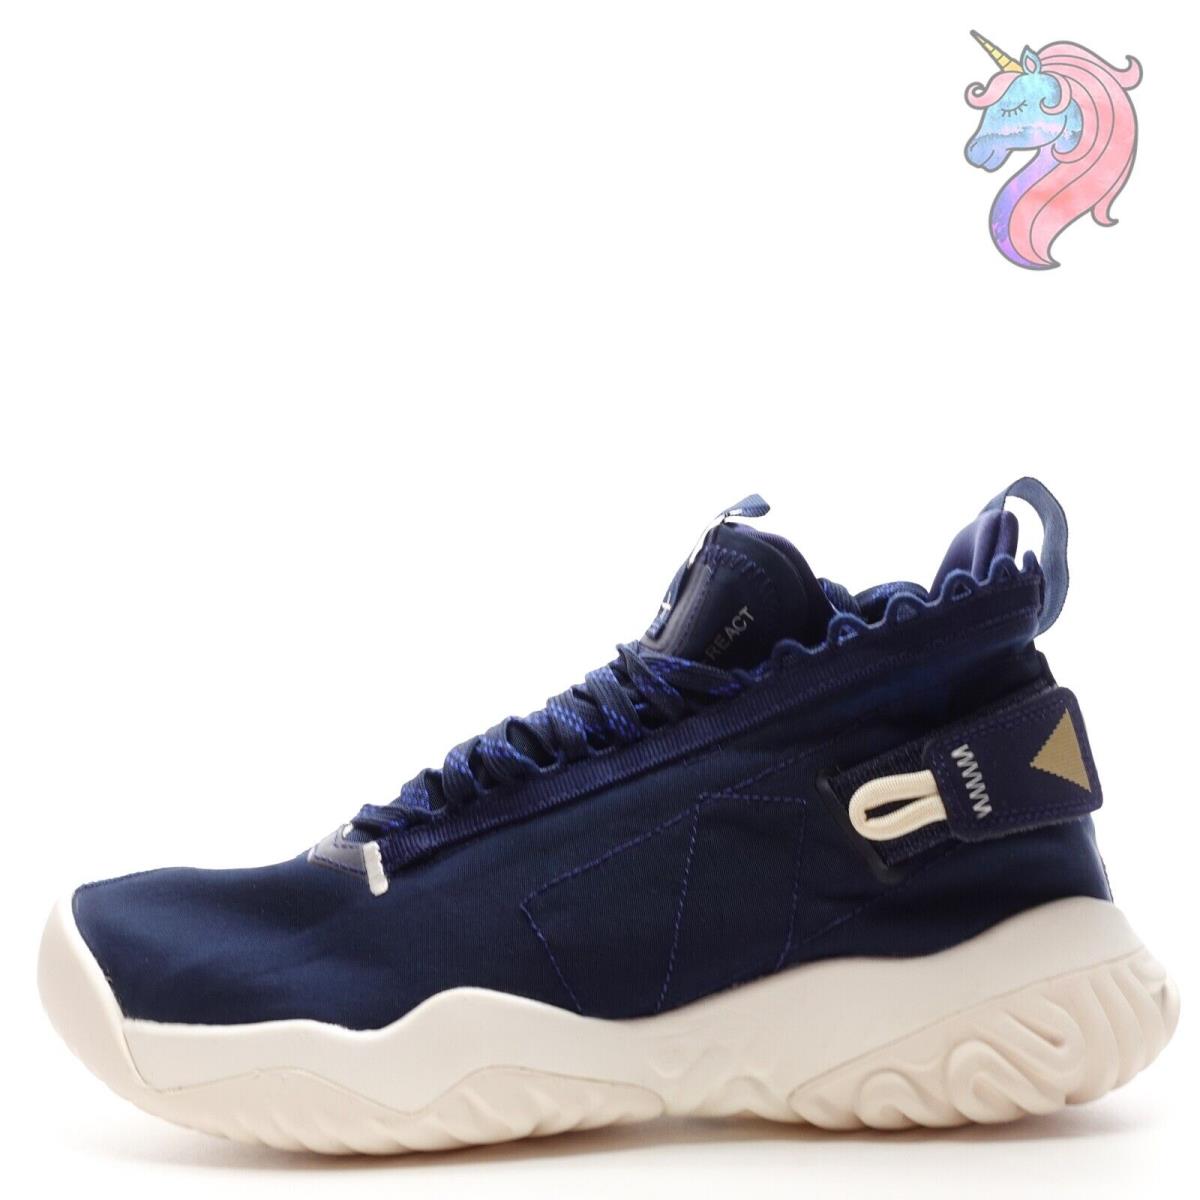 Nike shoes Proto - Navy Blue 2